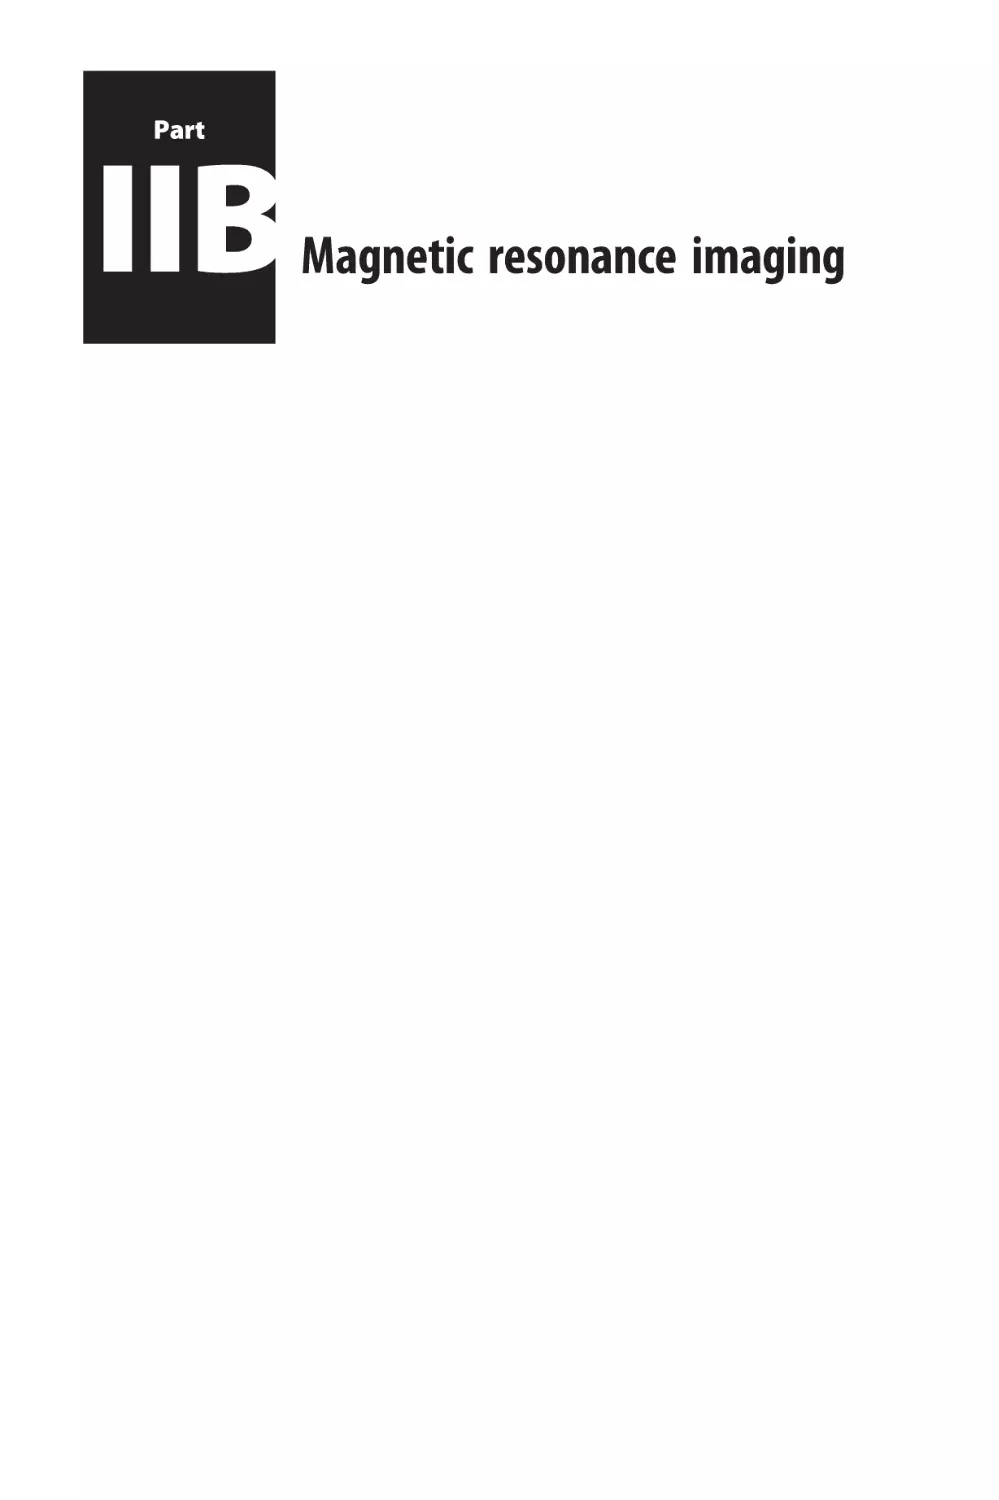 Part IIB Magnetic resonance imaging